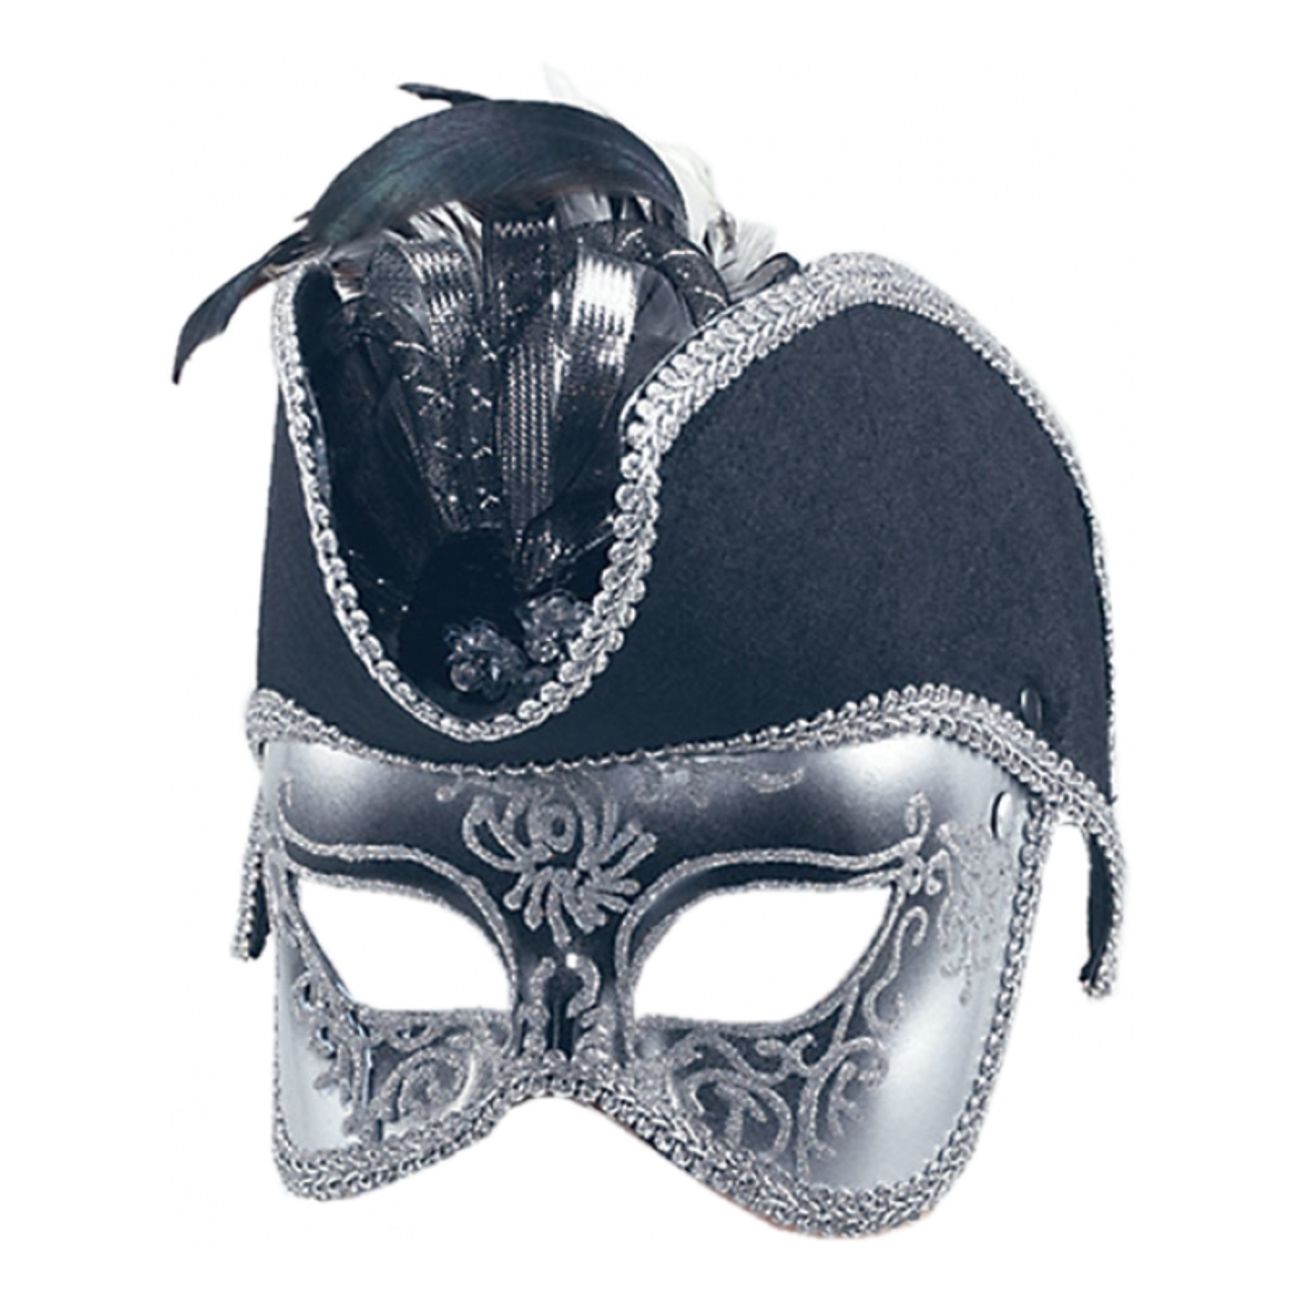 pirate-carnival-mask-1